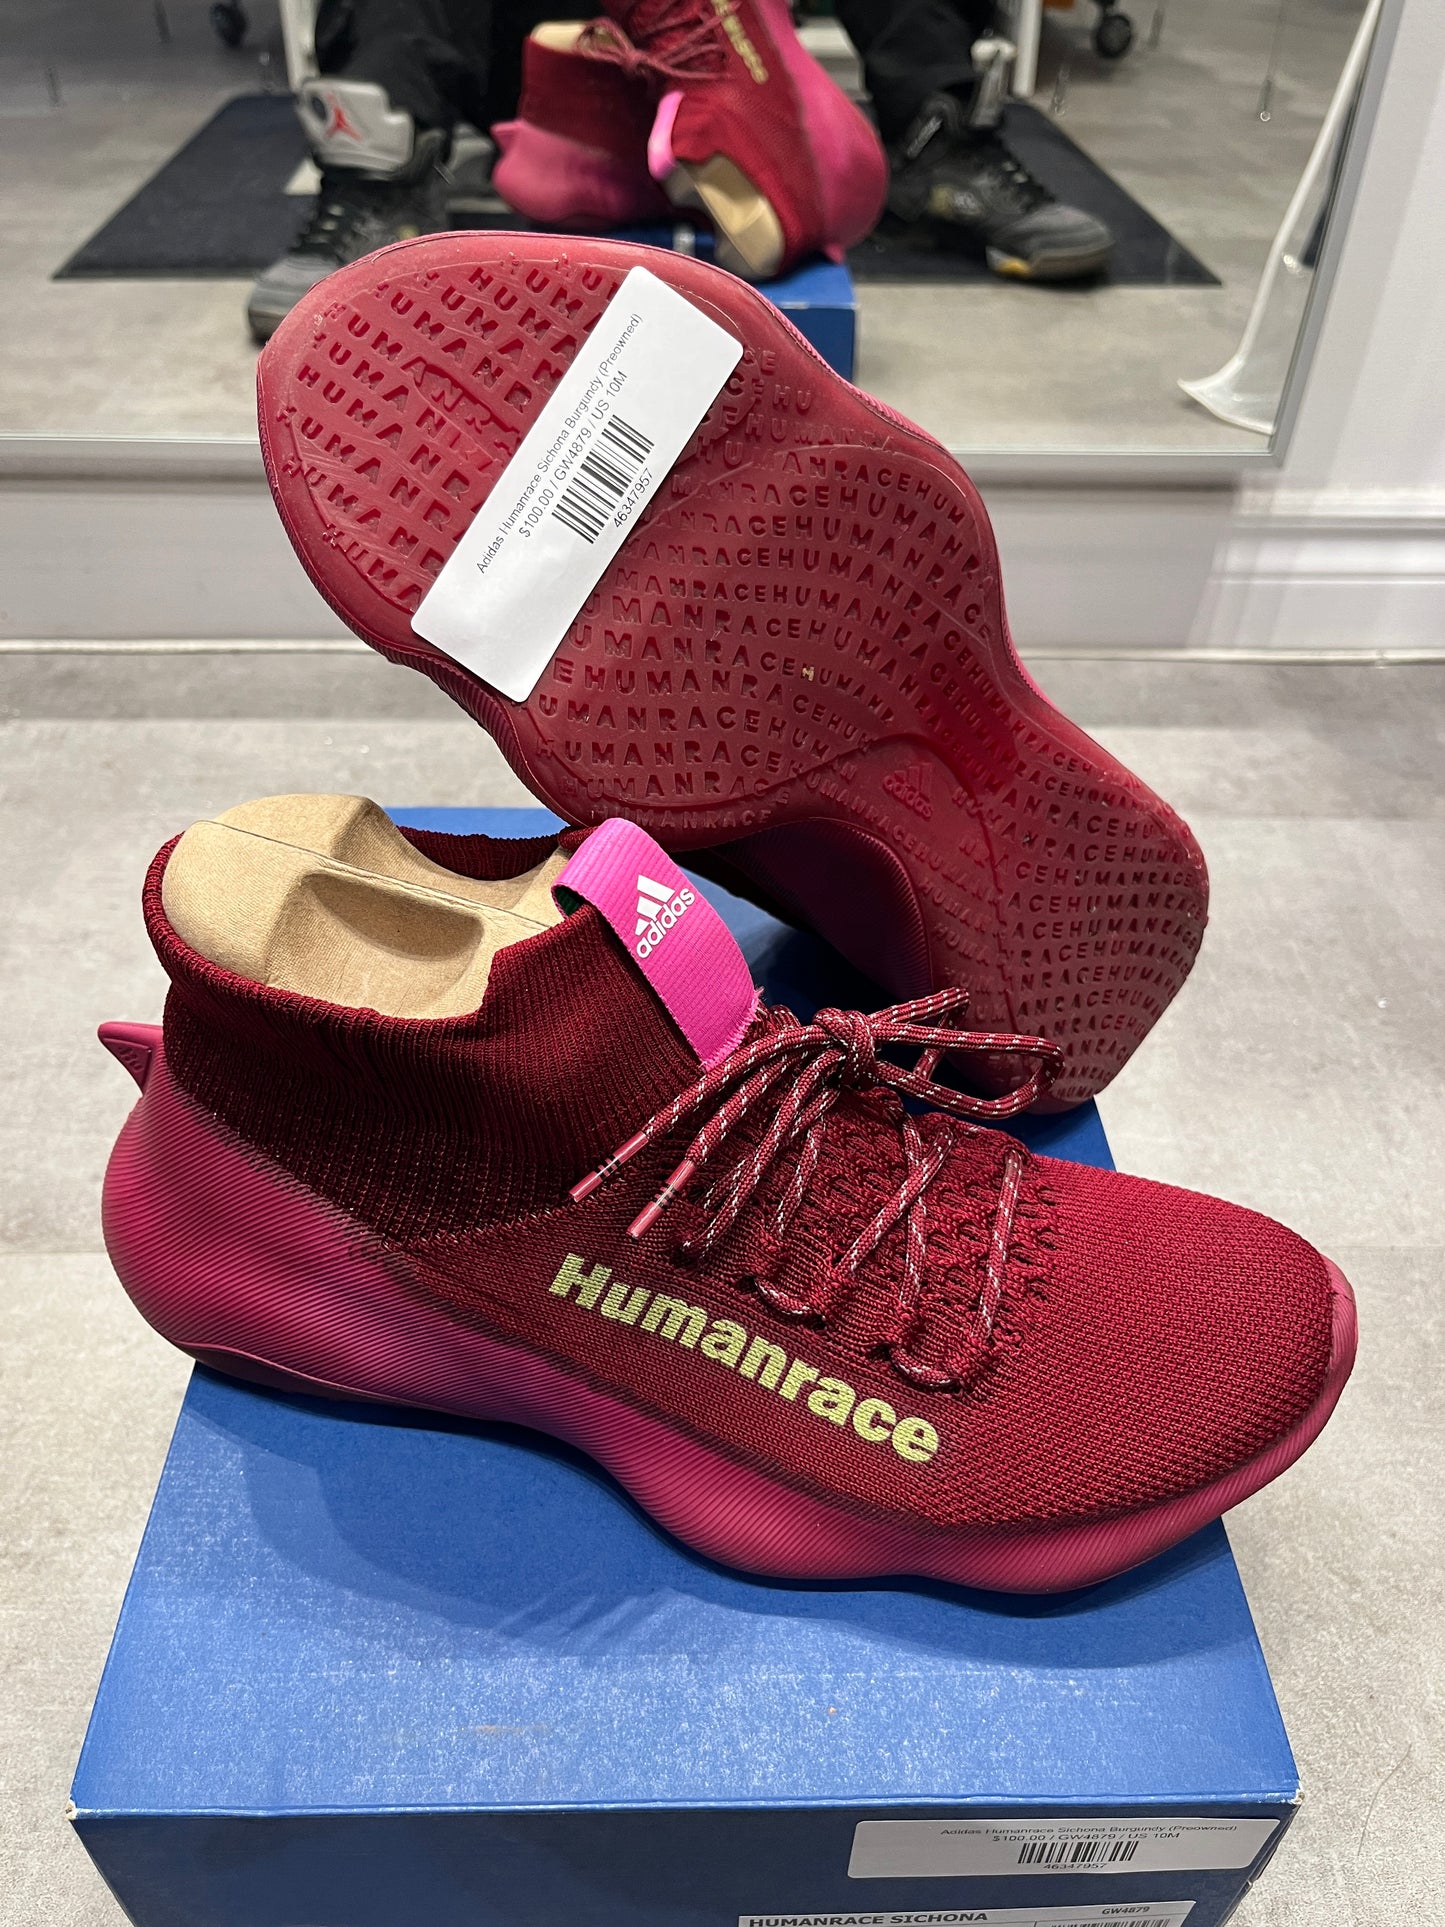 Adidas Humanrace Sichona Burgundy (Preowned)